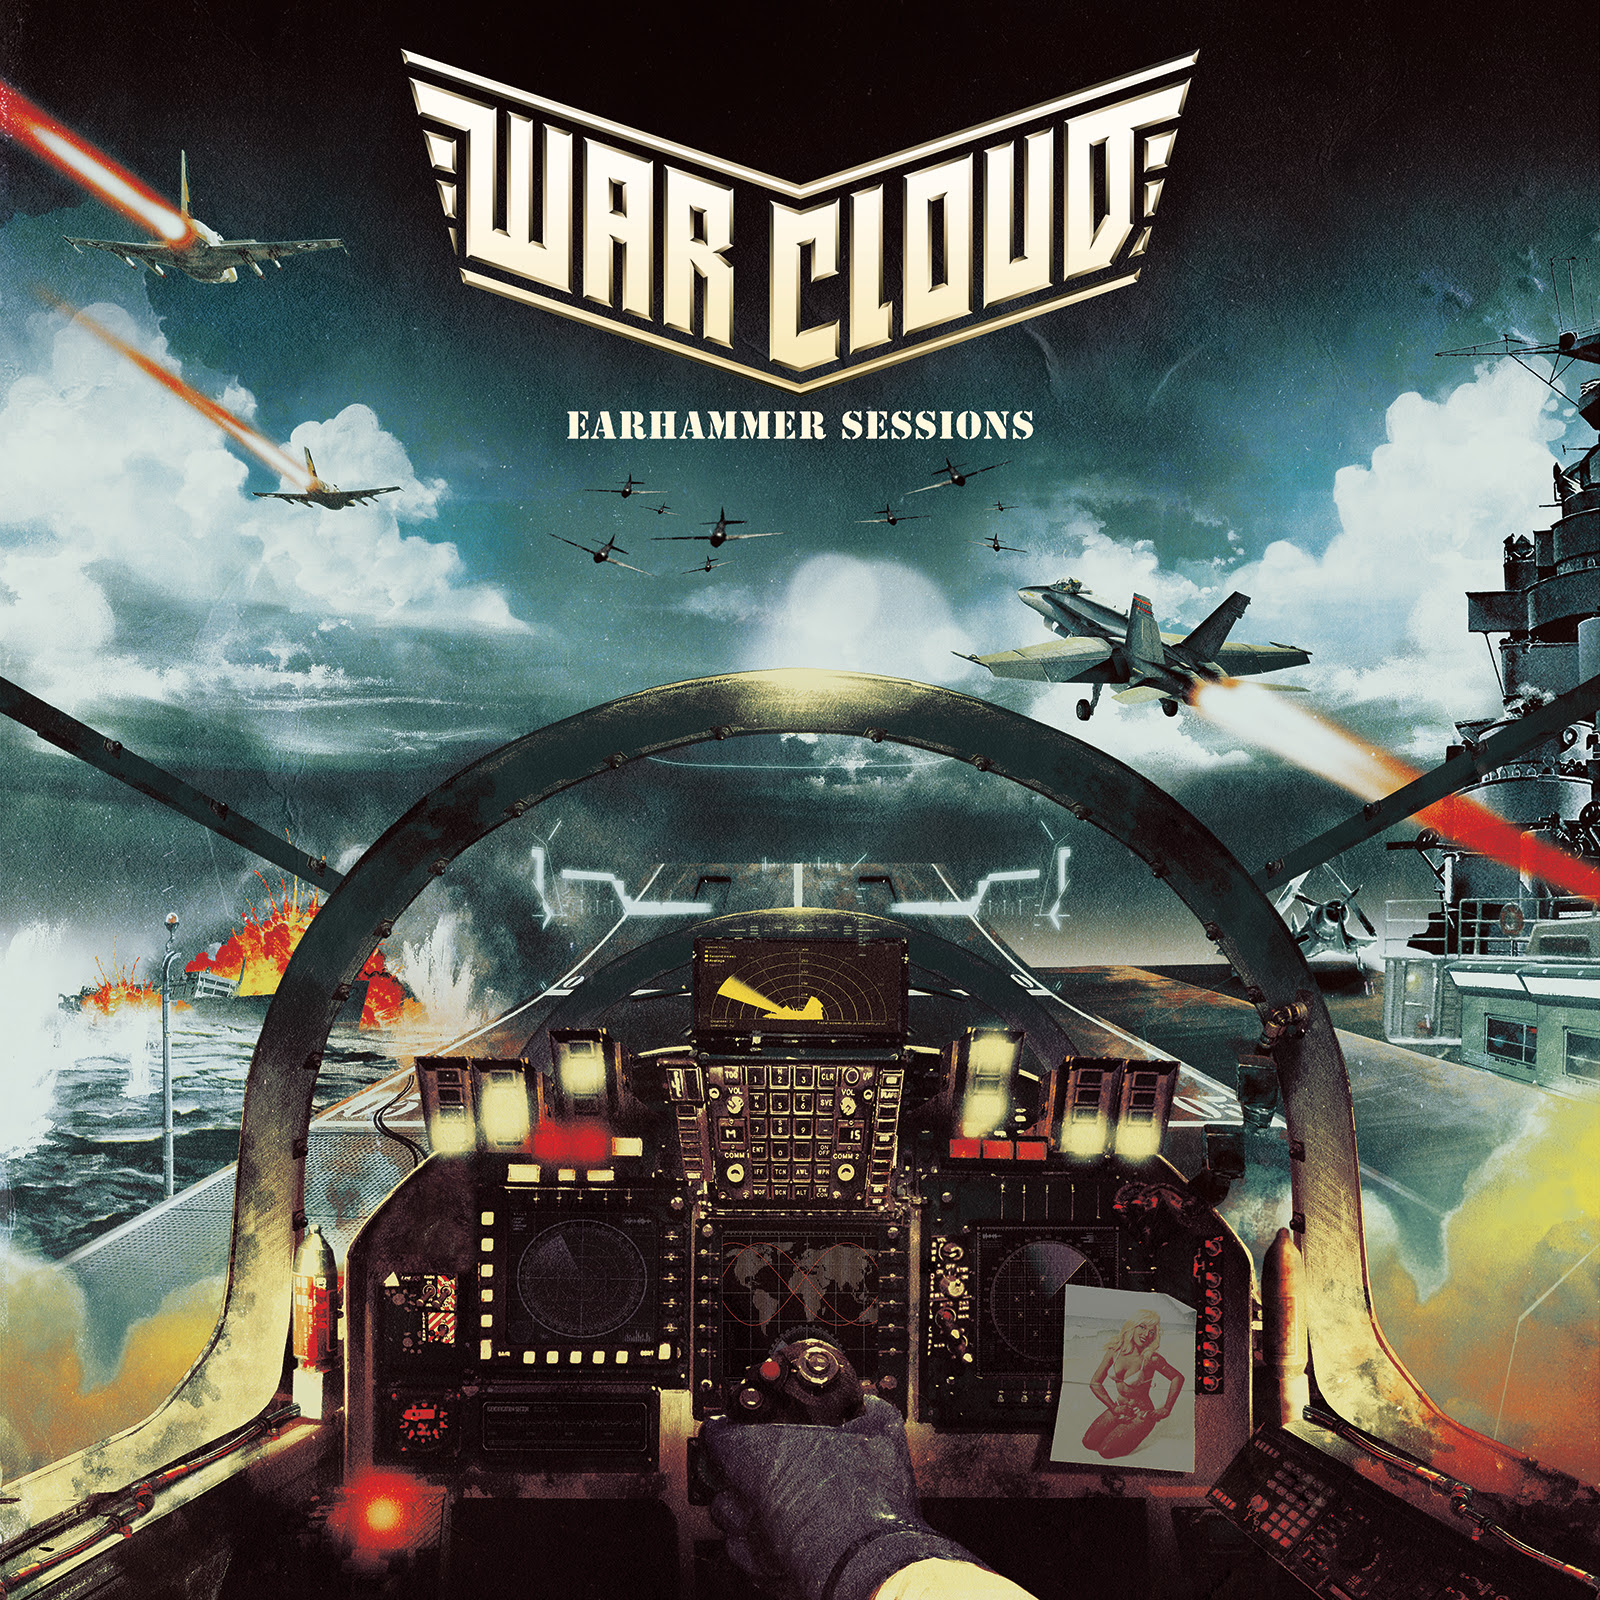 Earhammer Sessions (War Cloud)